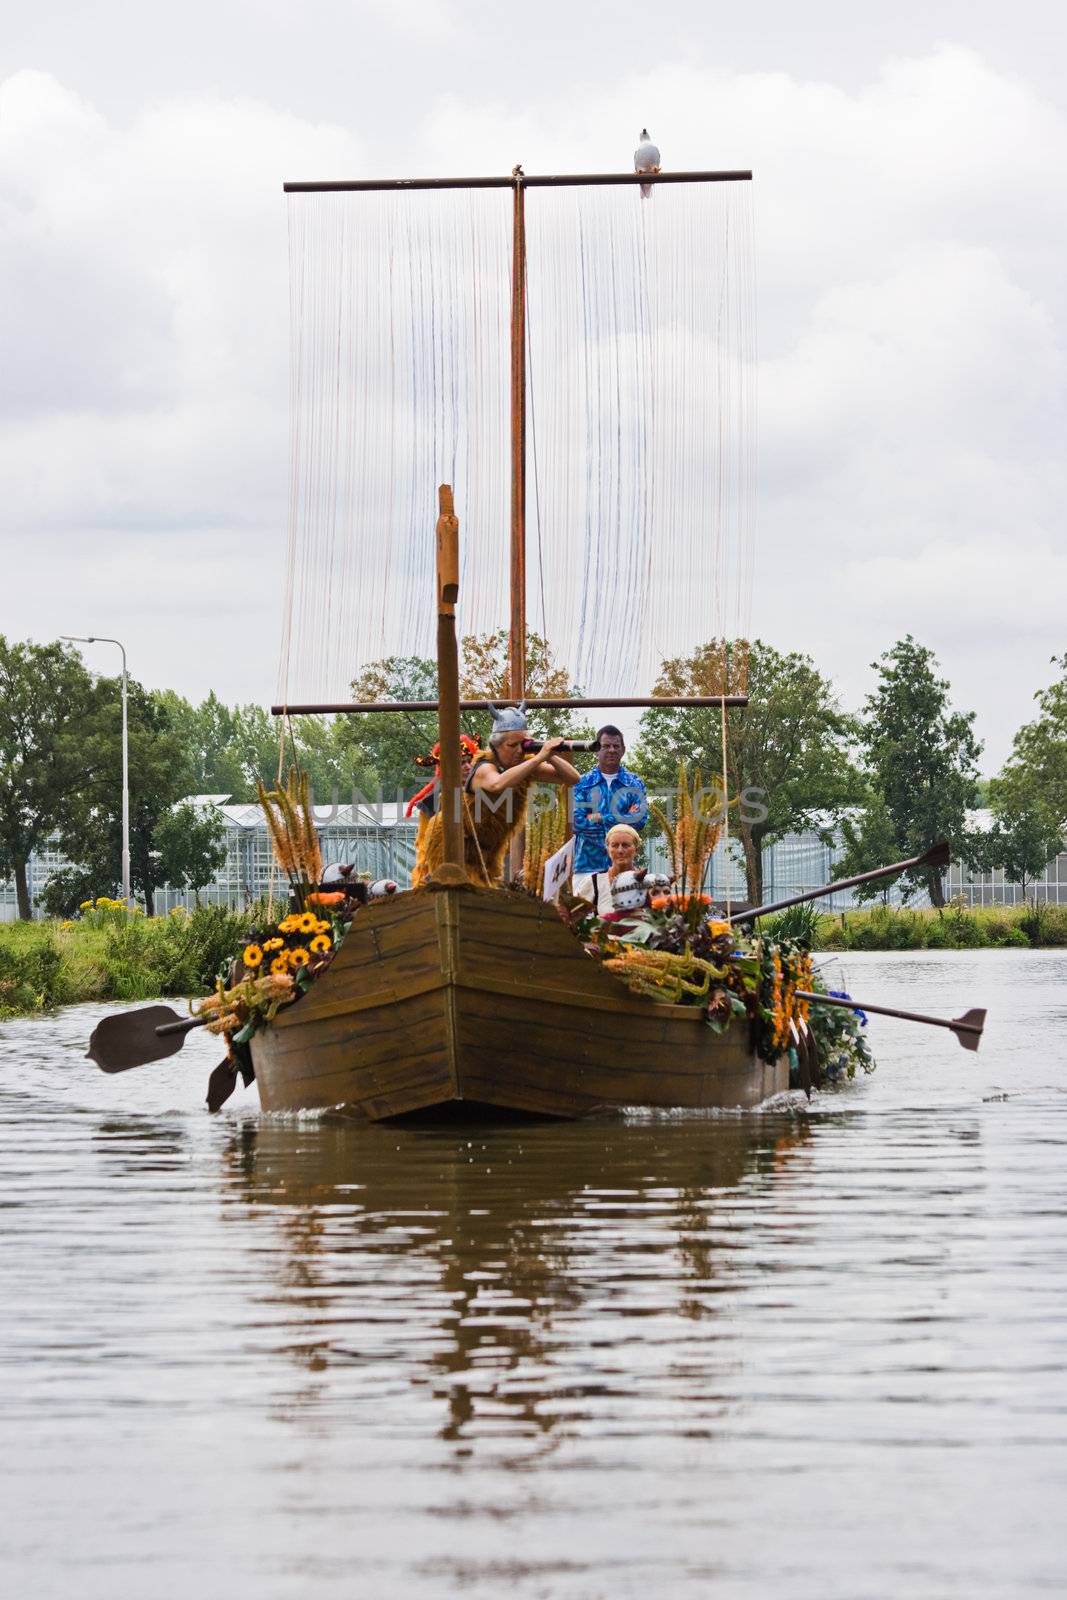 Westland Floating Flower Parade 2009, The Netherlands by Colette